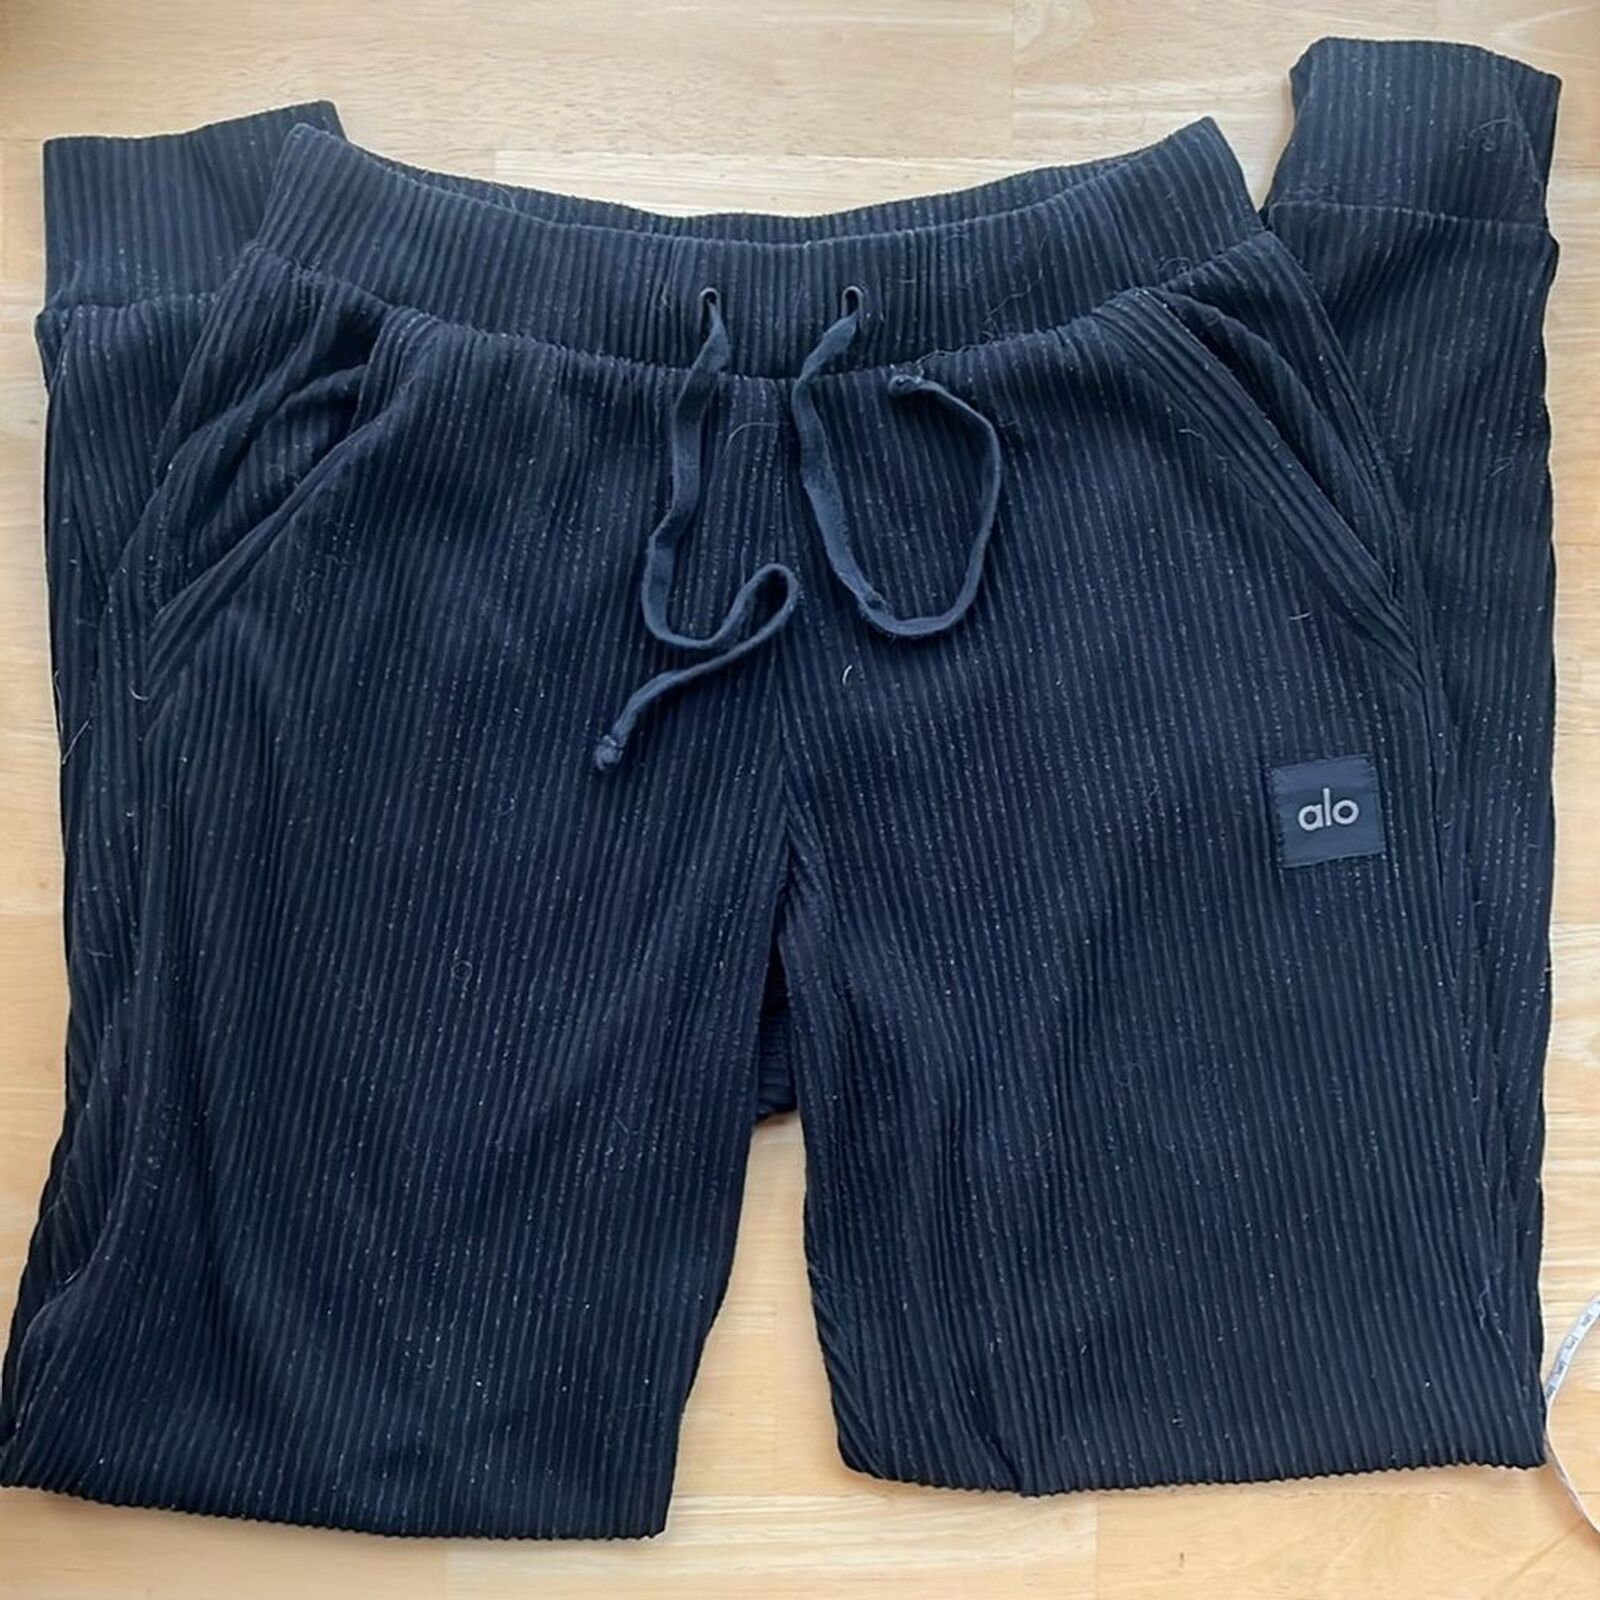 ALO Muse Sweatpants Size Medium - Gem